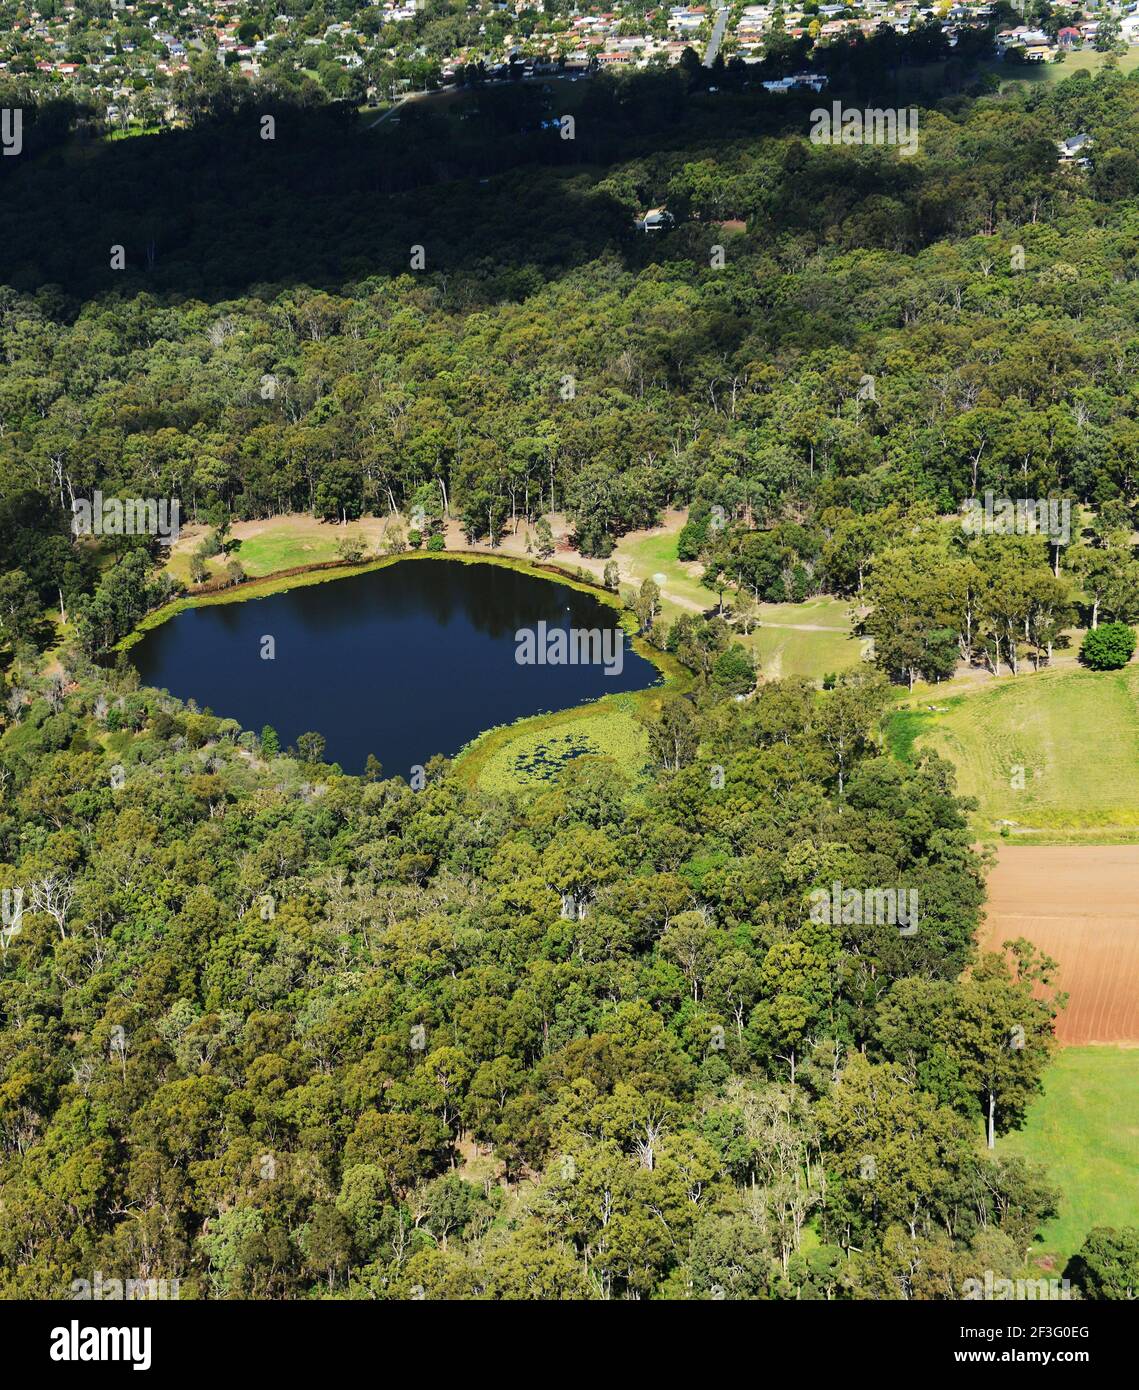 Aerial landscapes of rural farm areas in Queensland, Australia. Stock Photo